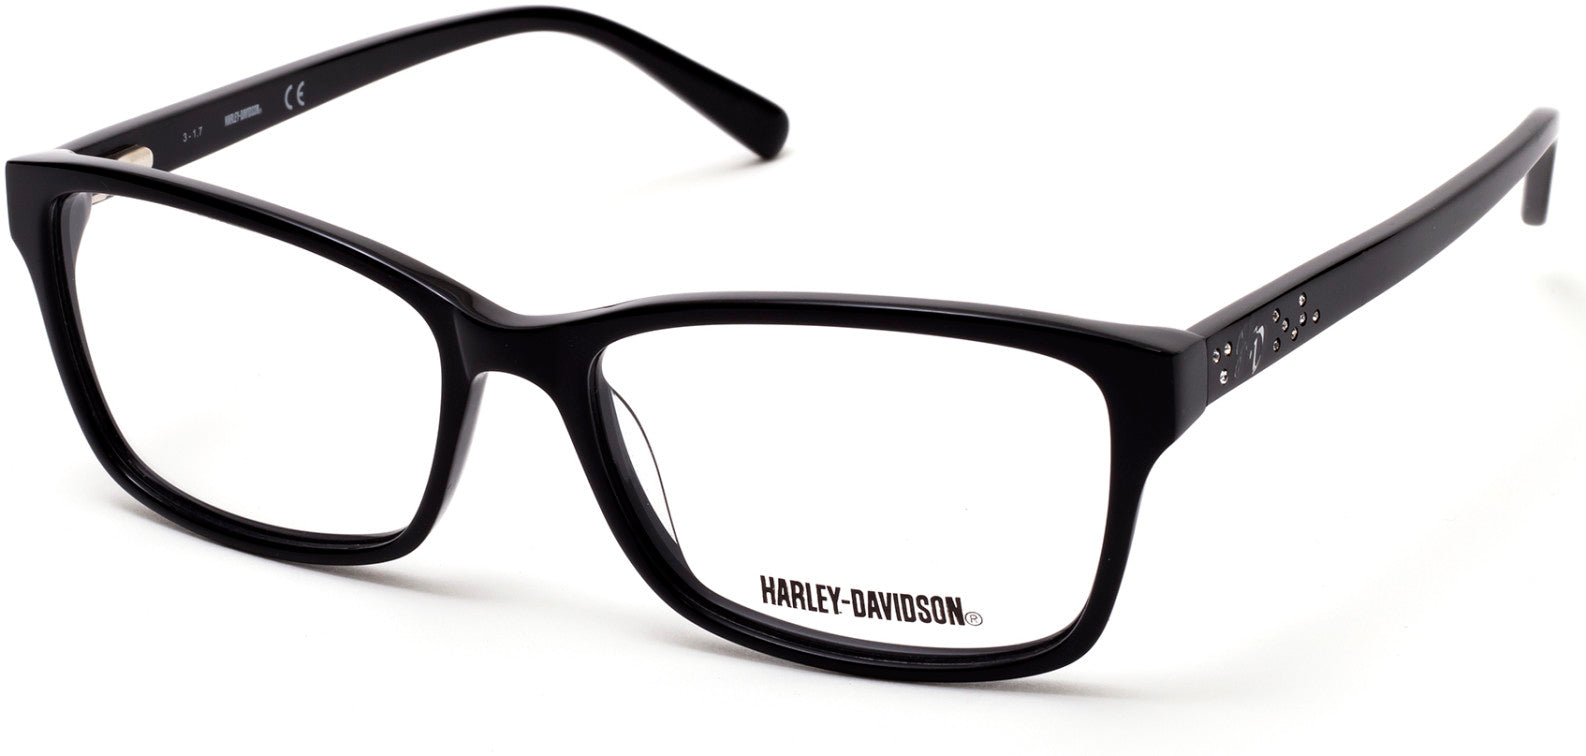 Harley-Davidson HD0544 Geometric Eyeglasses 001-001 - Shiny Black